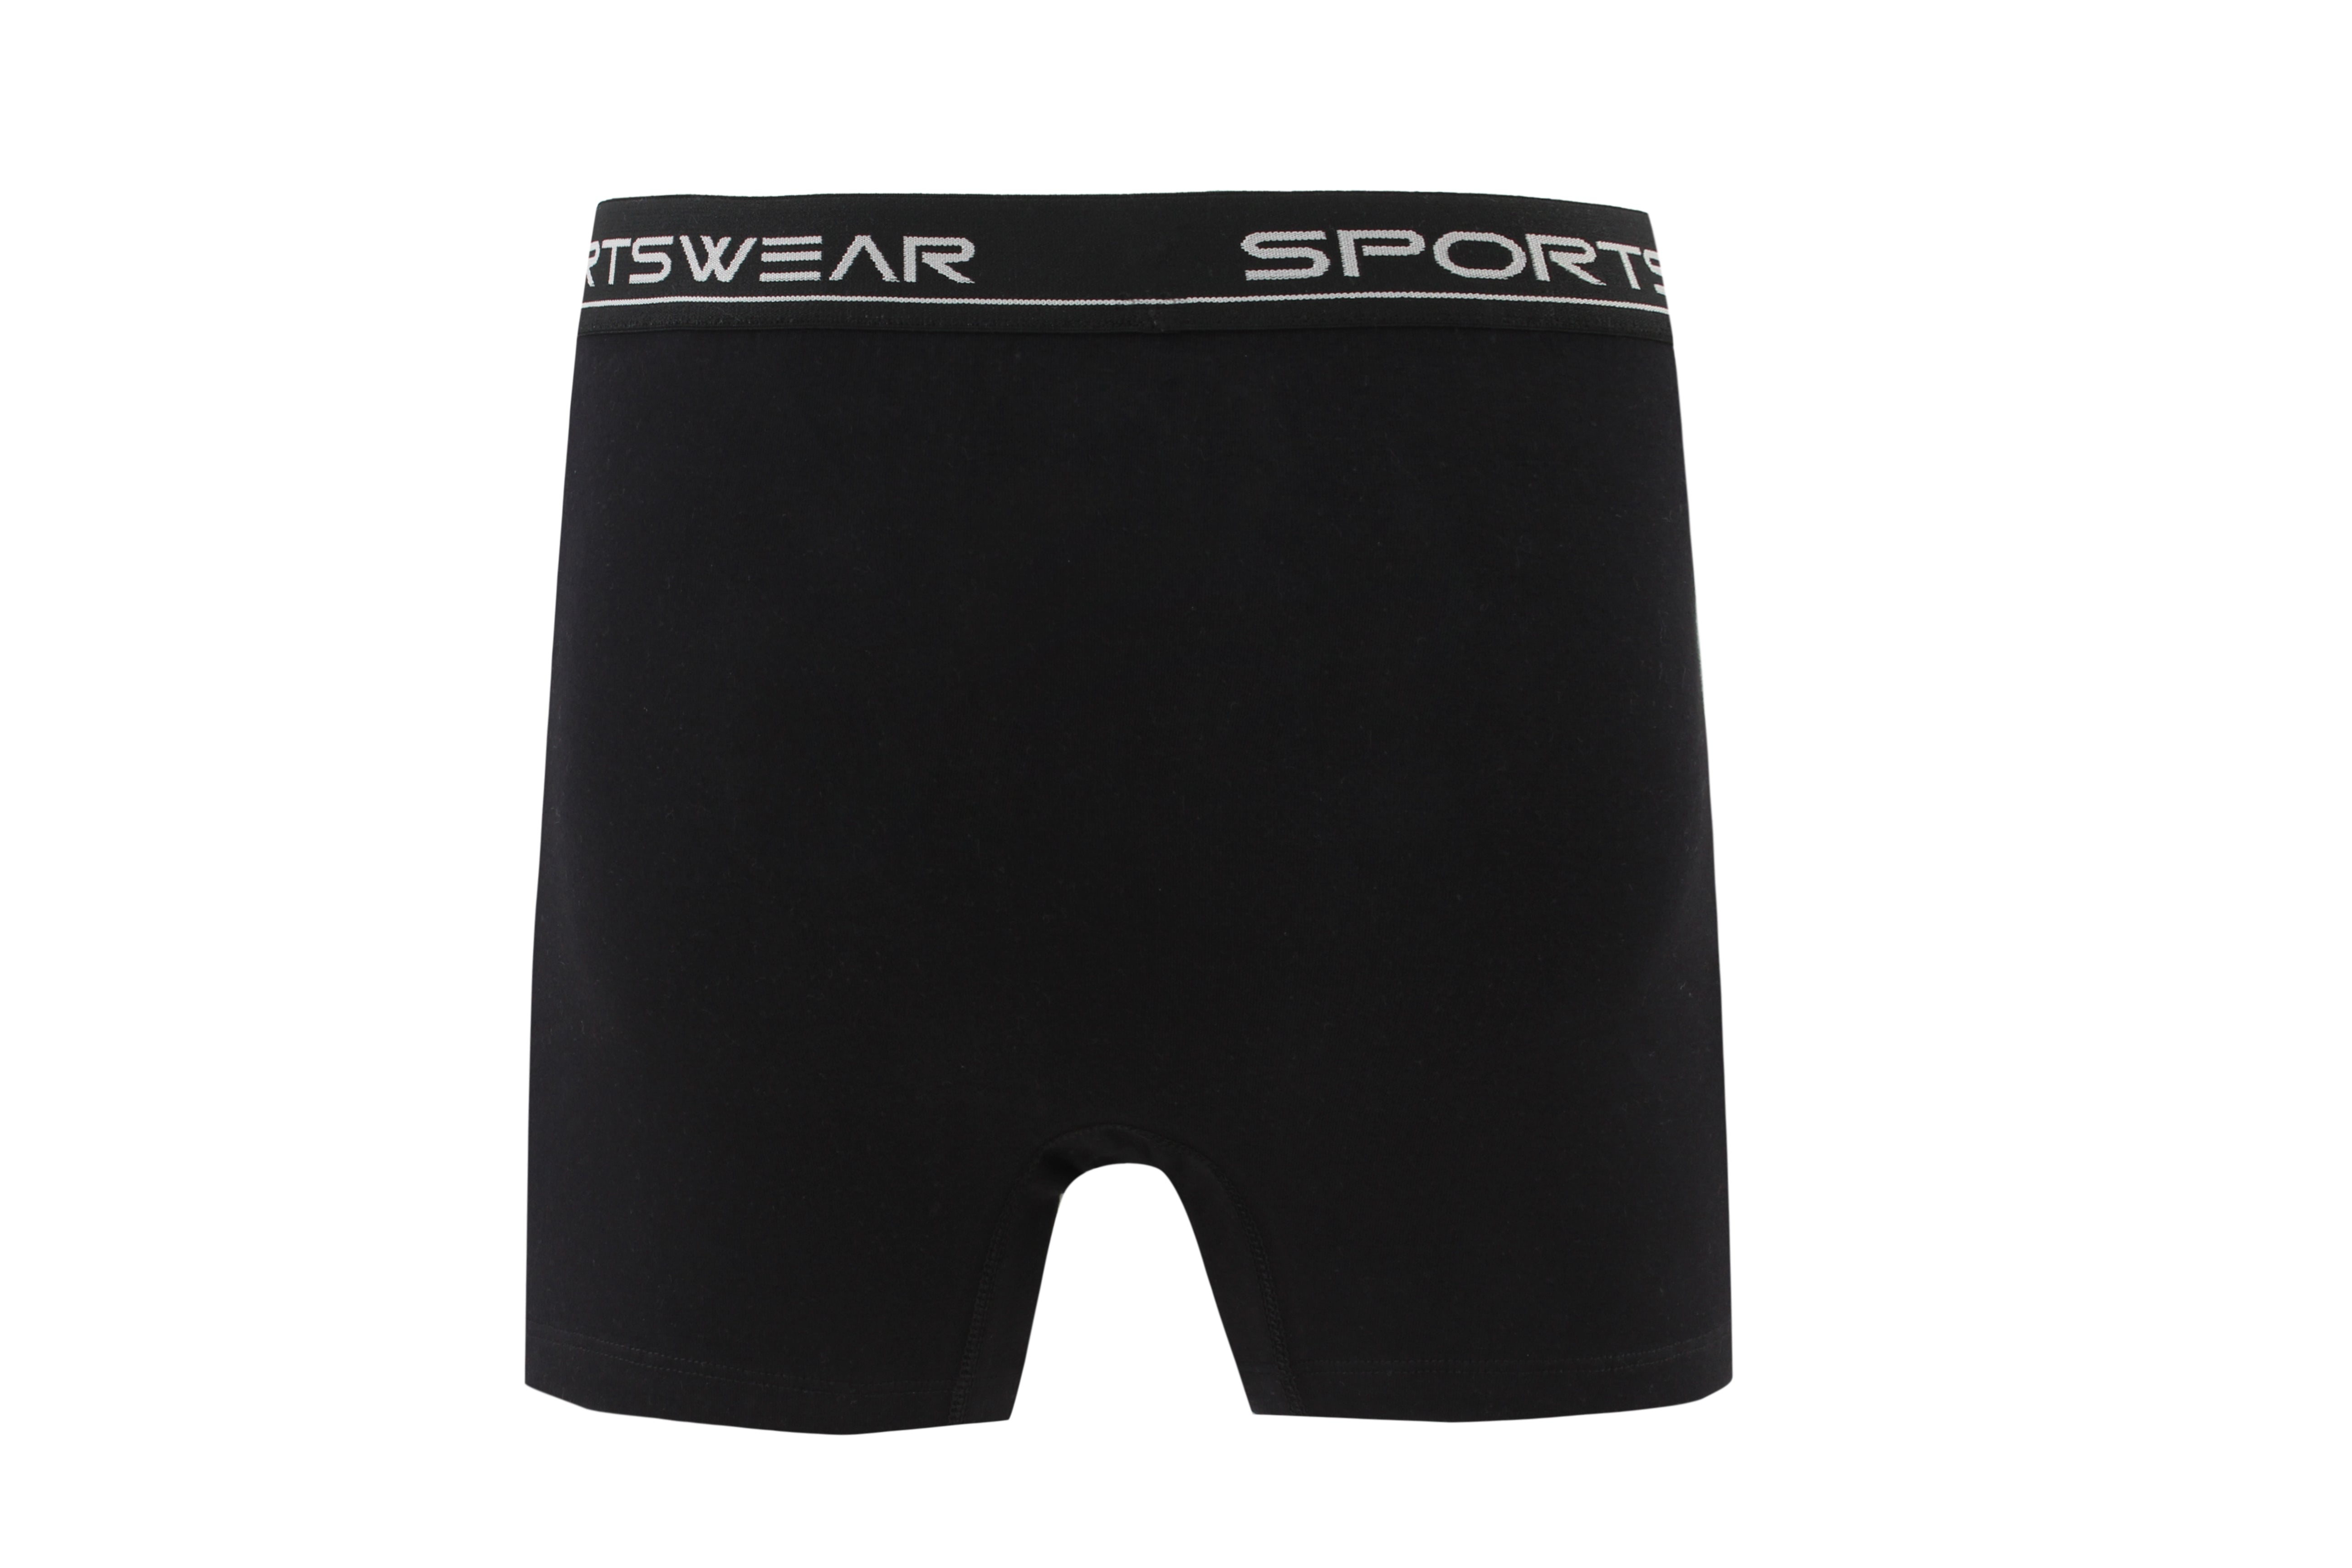 Men's Sportswear Boxer Briefs